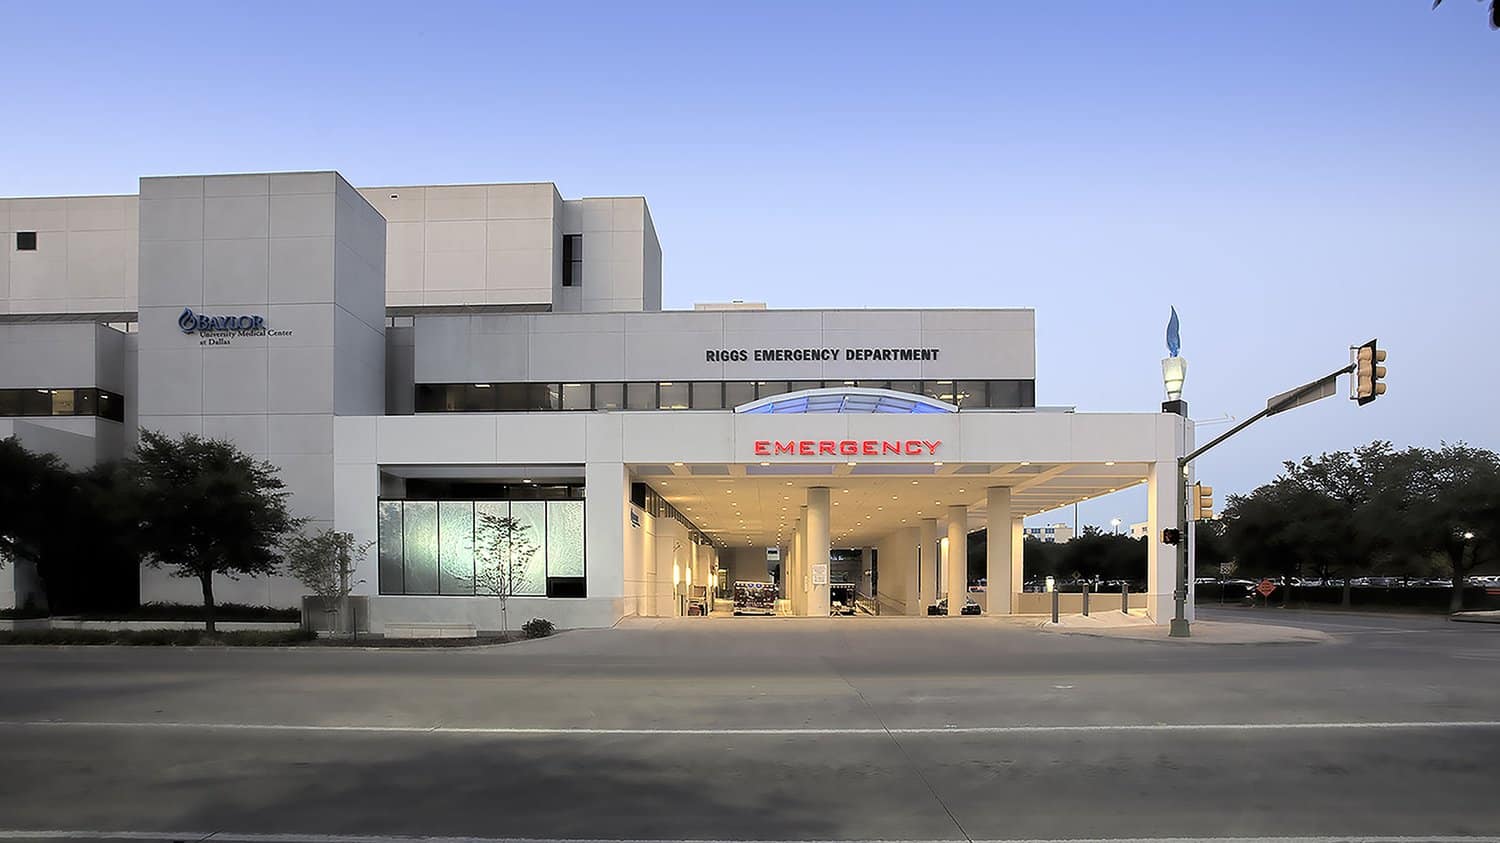 Hospital emergency department entrance at twilight.